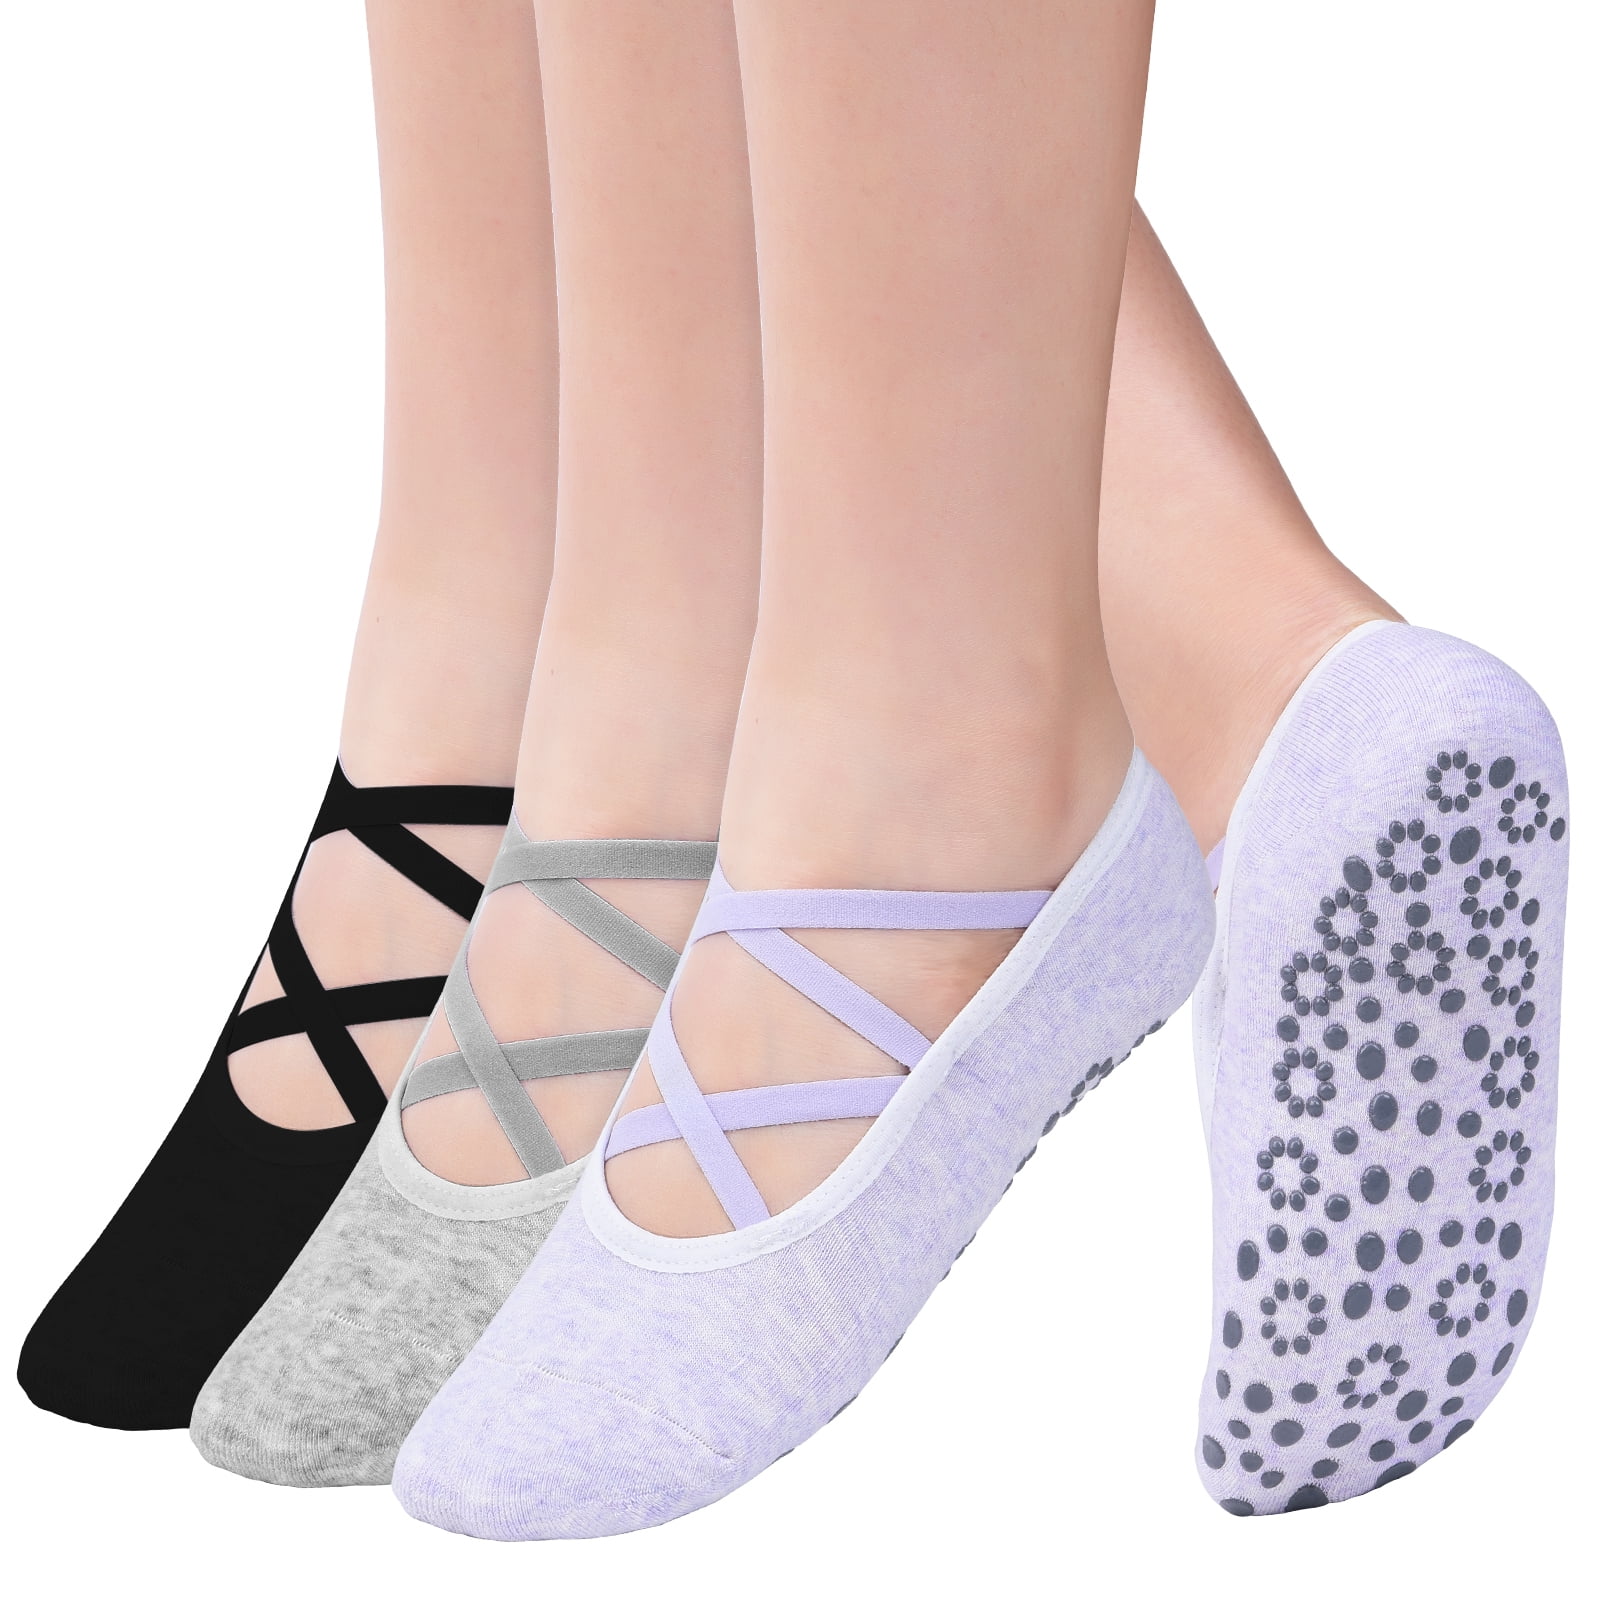 Yoga Socks with Non-Slip Grip Pilates Barre Ballet Dance Gym Sports Fitness 